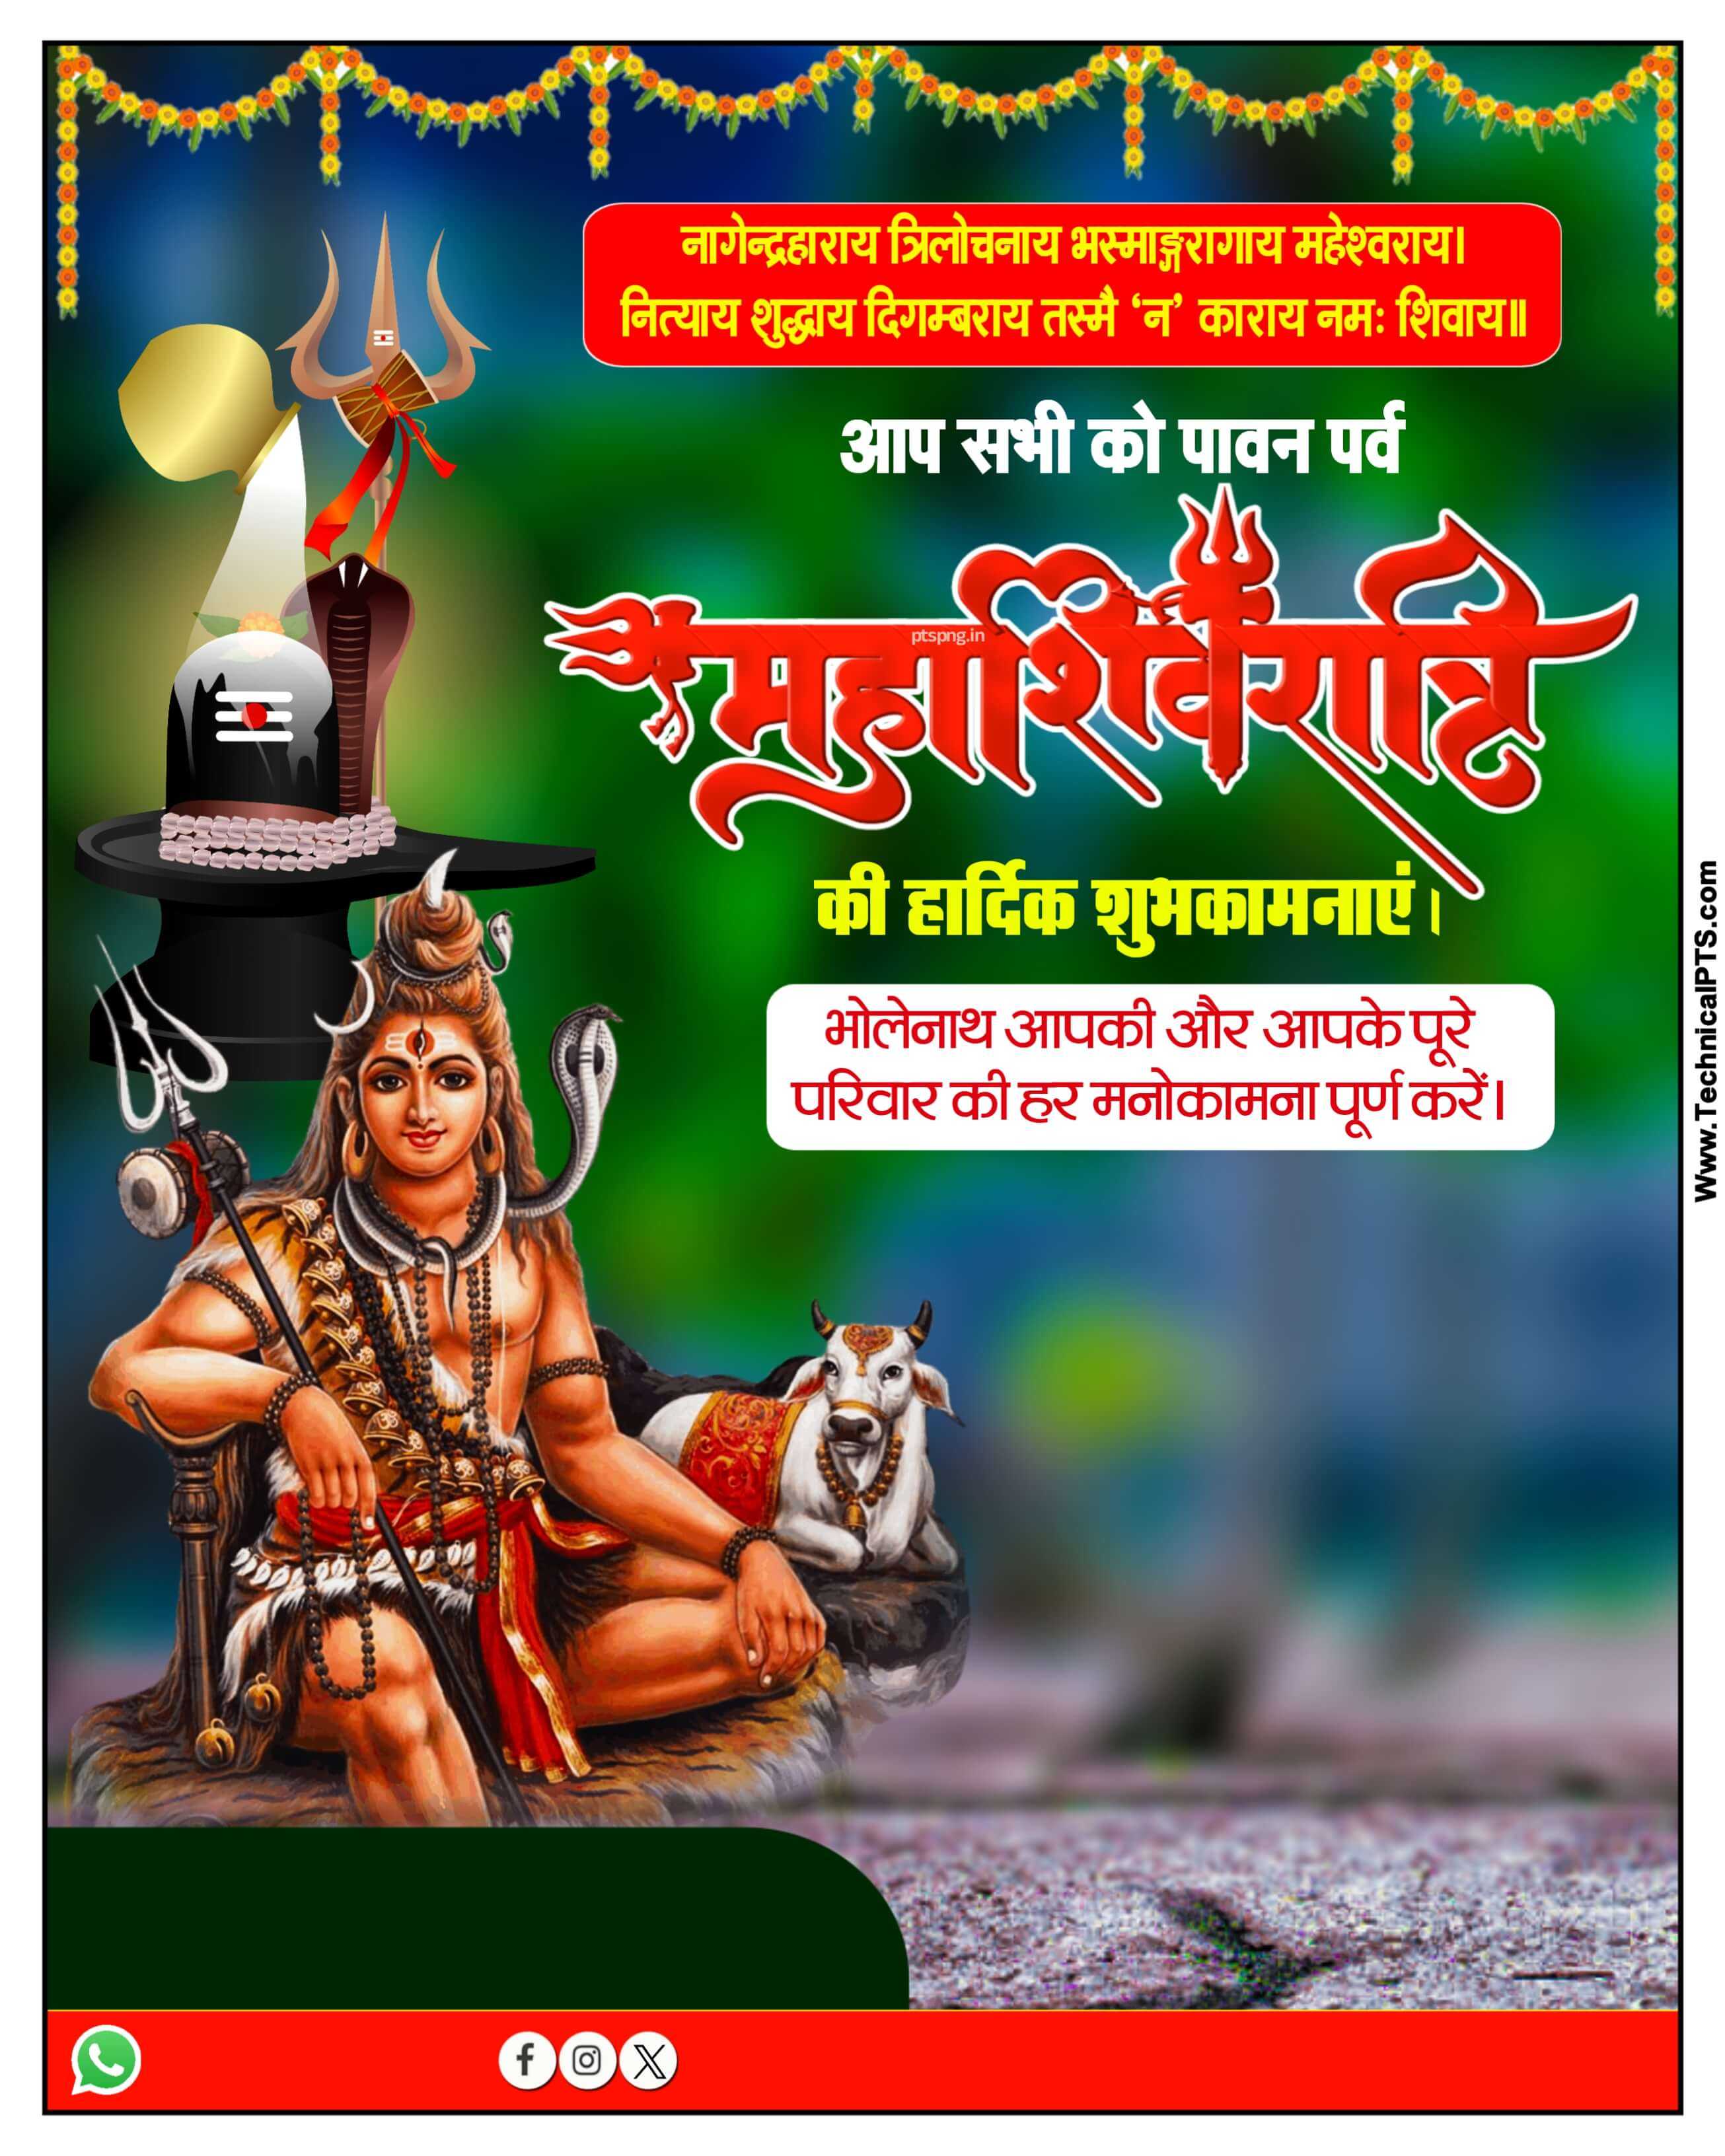 Mahashivratri poster PlP file download| Mahashivratri banner editing plp file| Mahashivratri poster design in Hindi